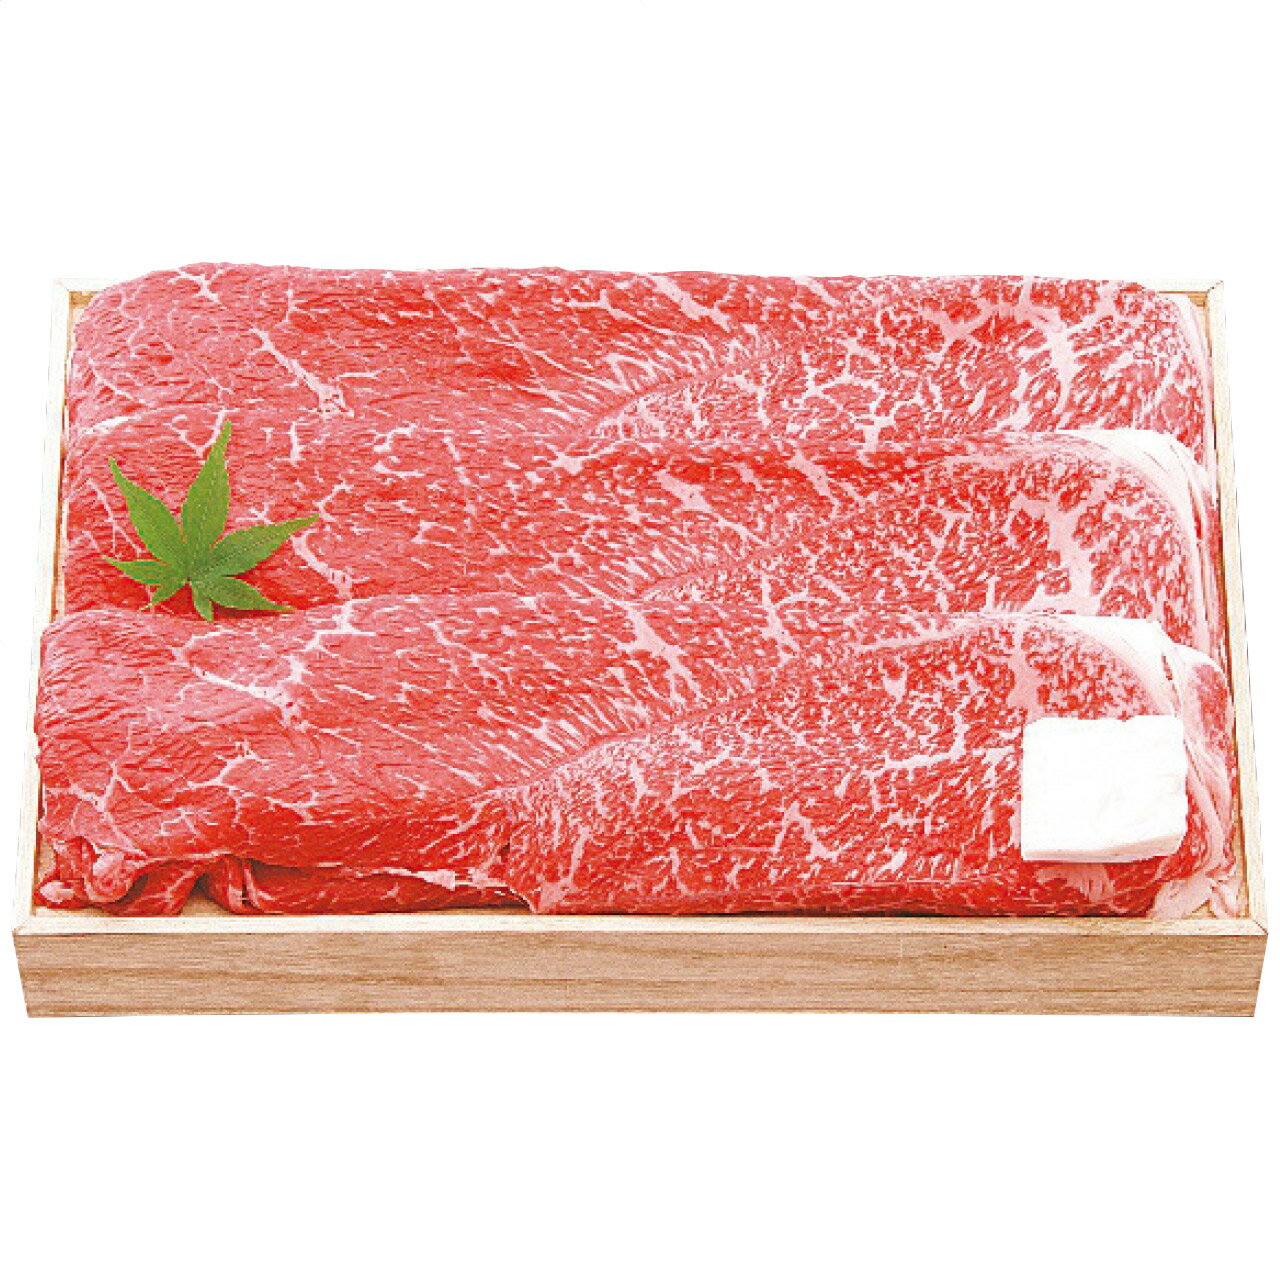 近江牛 すき焼き(約1kg) 千成亭 日本製 [APD2268-072 産直]| 肉食品 精肉・肉加工品 肉類